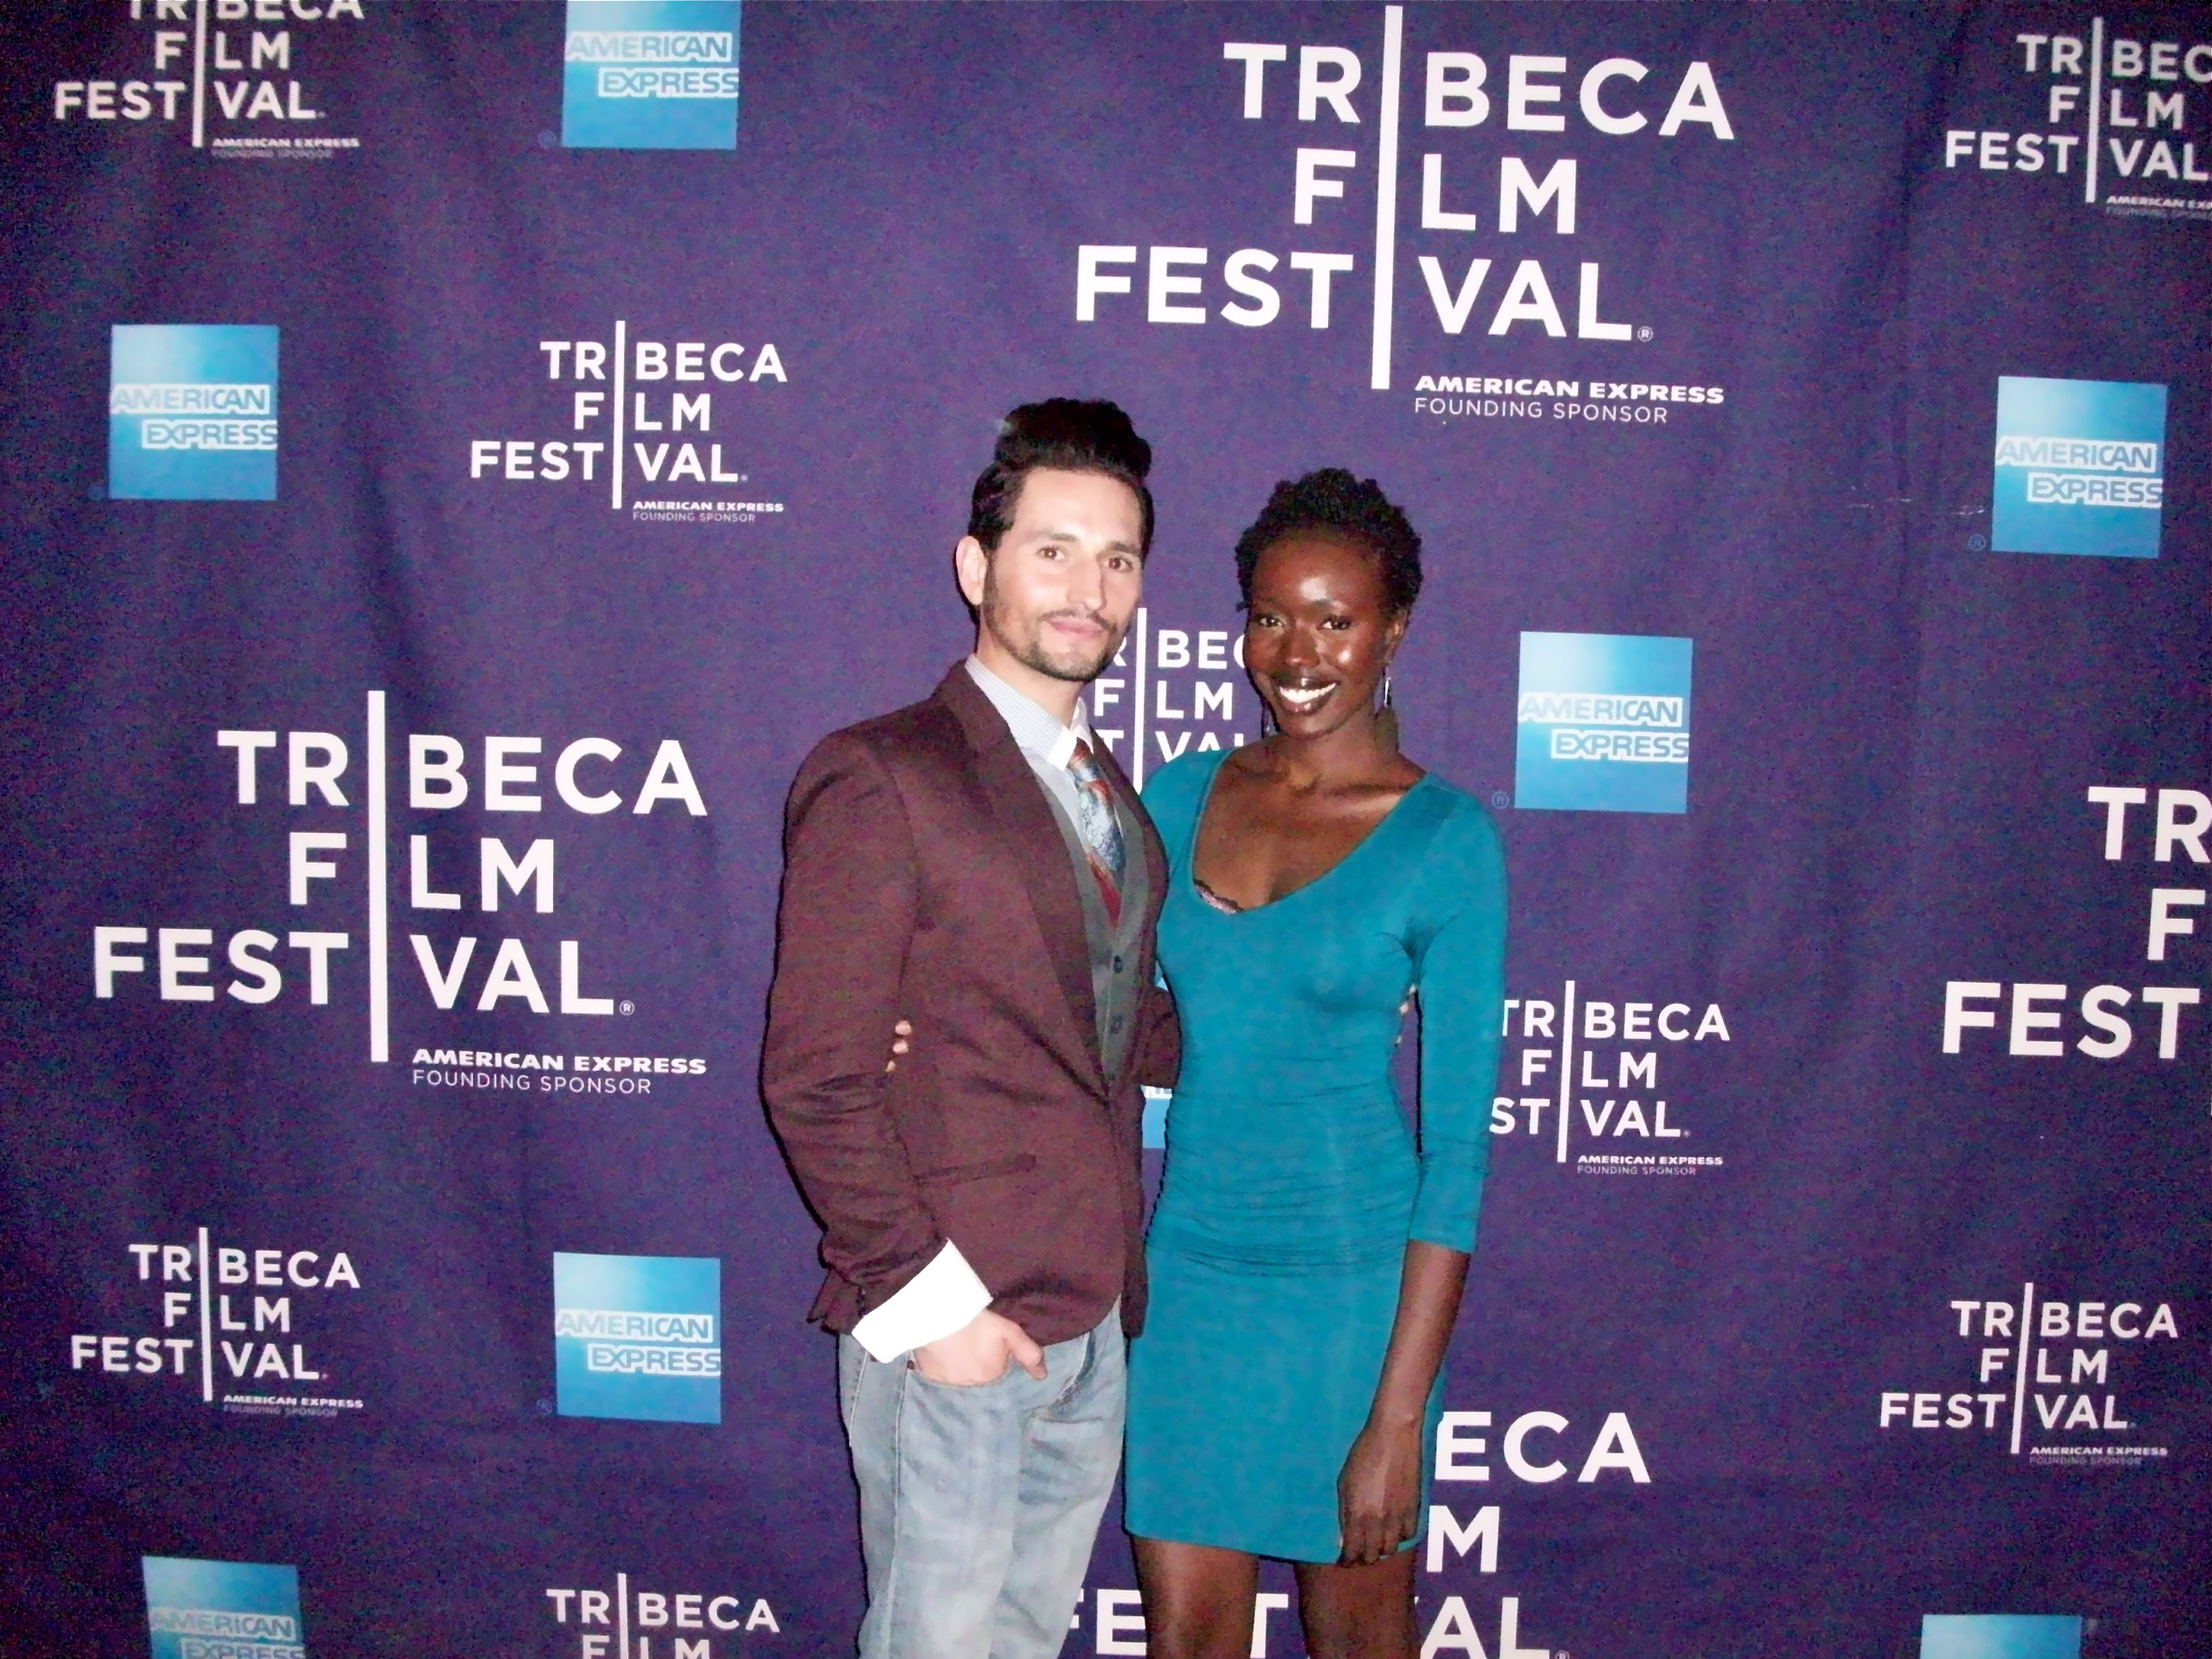 Tribeca Film Festival Xavier Jimenez-March and Anna Diop